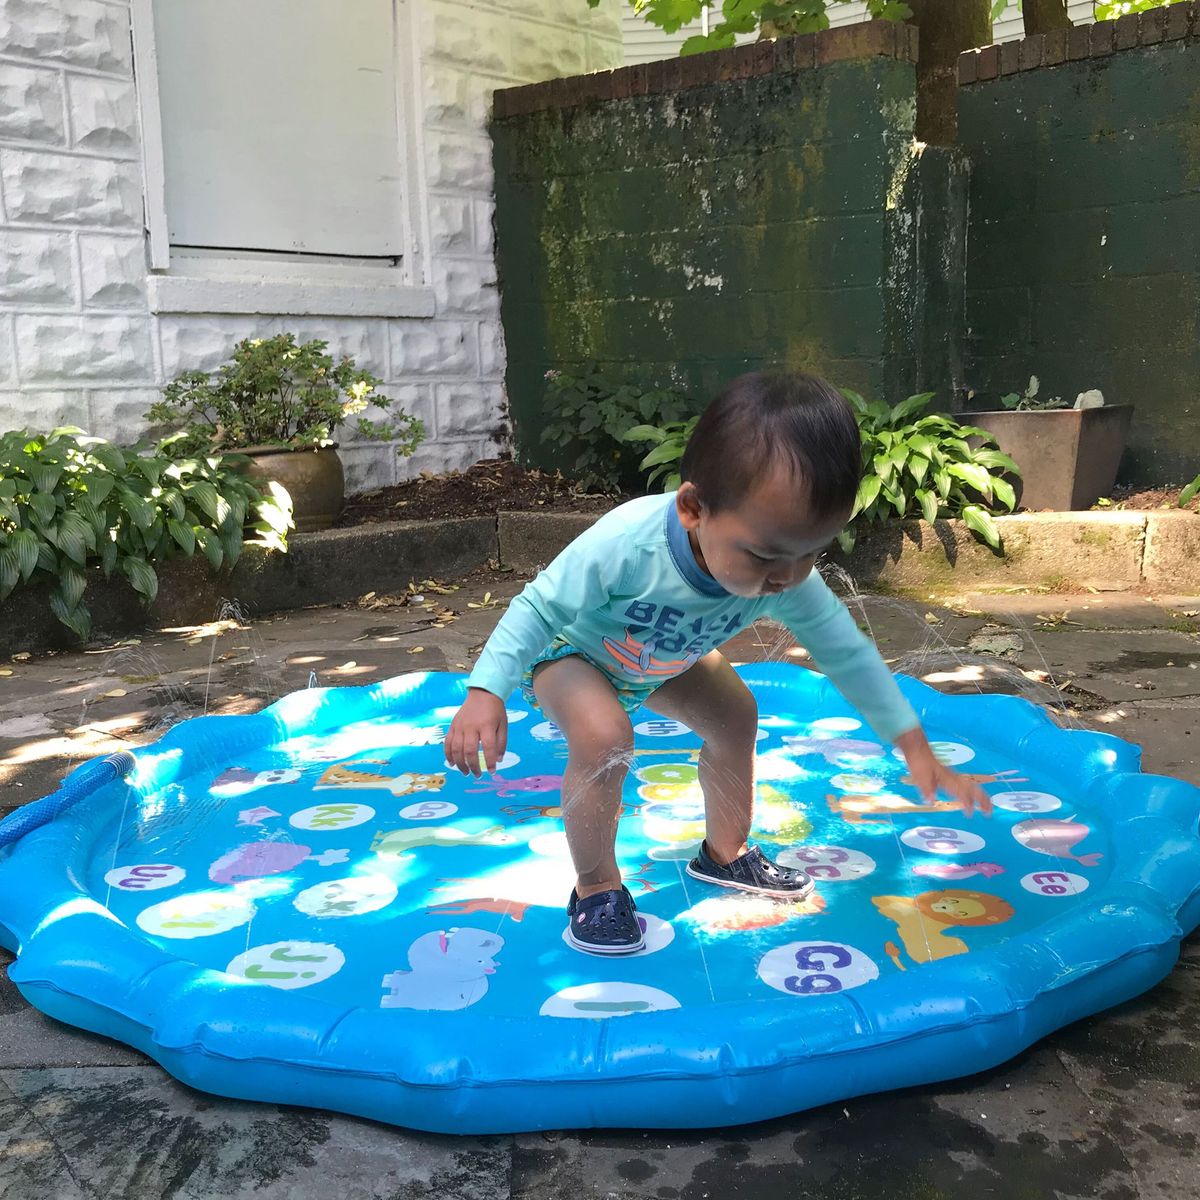 Sprinkler for Kids and Toddler Pool for Learning SplashEZ USA 3-in-1 Splash Pad 